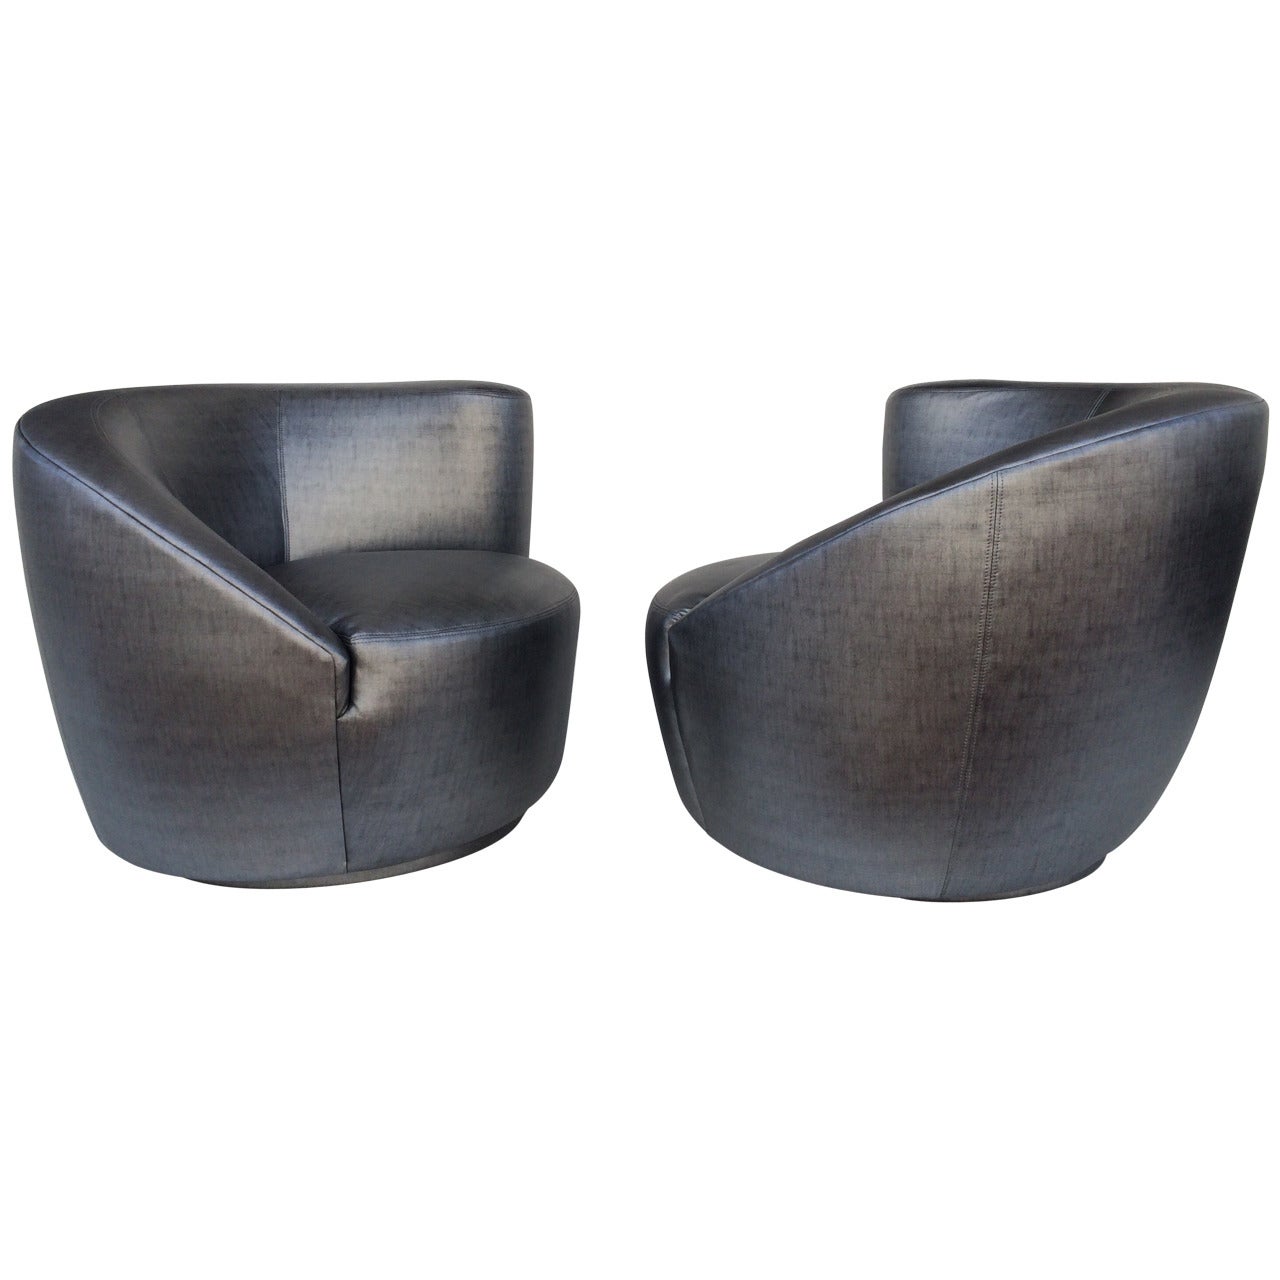 Pair of Swivel Chairs Lounge Chairs by Vladimir Kagan